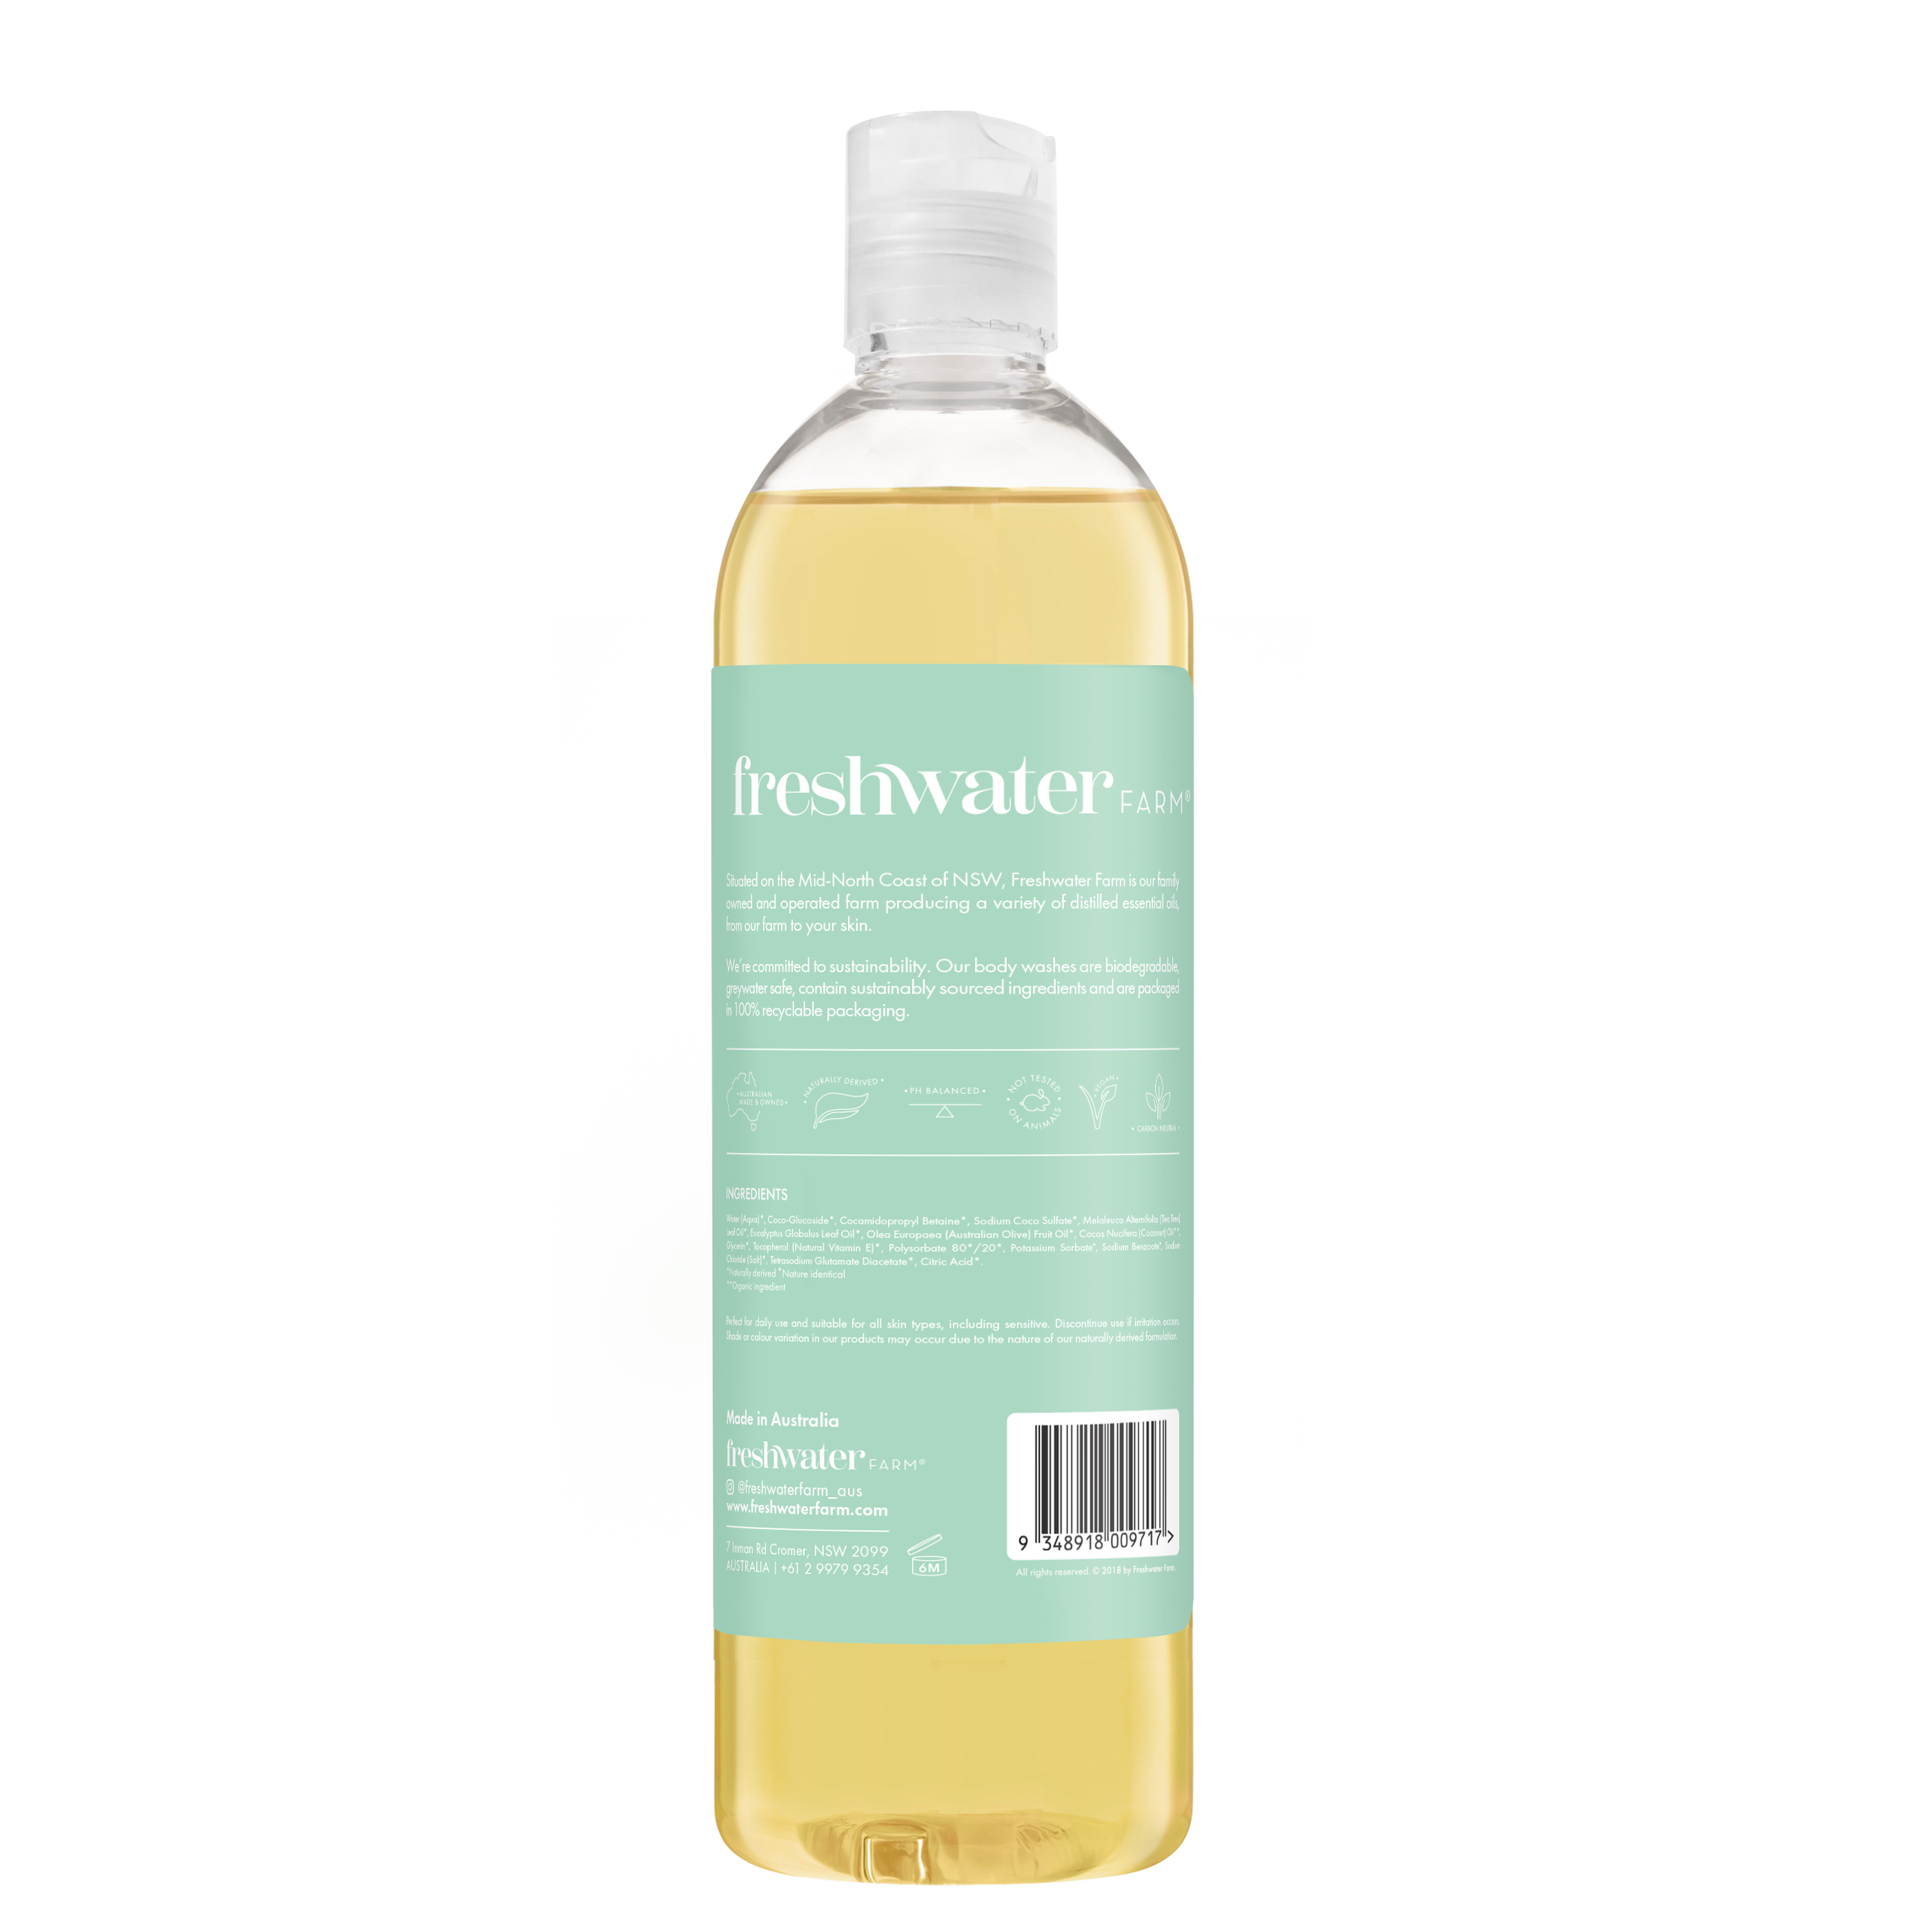 BODY WASH | Sanitising Tea Tree + Eucalyptus Oil 500ml